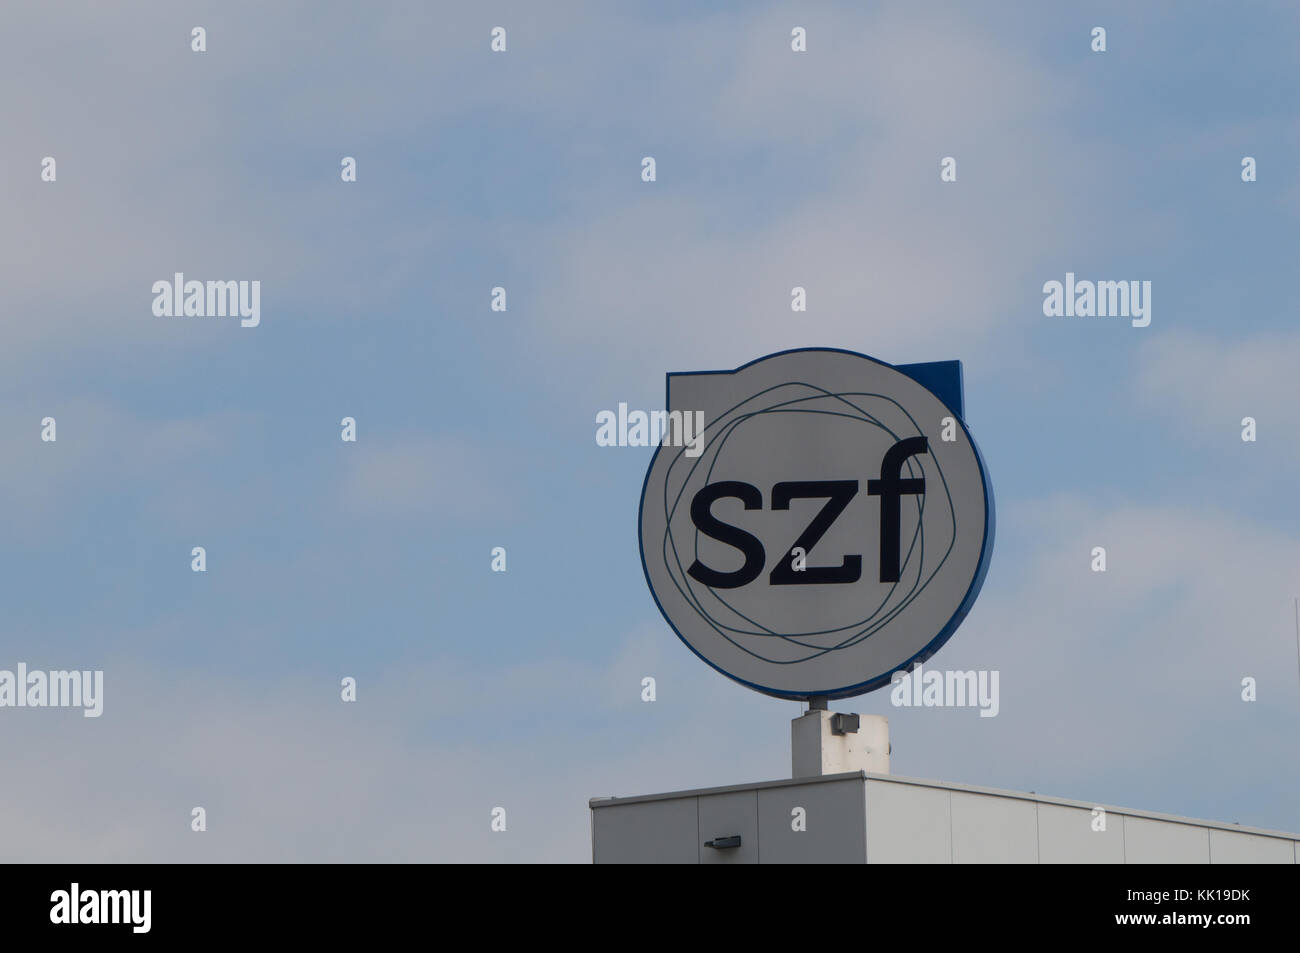 Fohnsdorf, Austria - 29.09.2017: The Schulungszentrum Fohnsdorf rotating logo Stock Photo